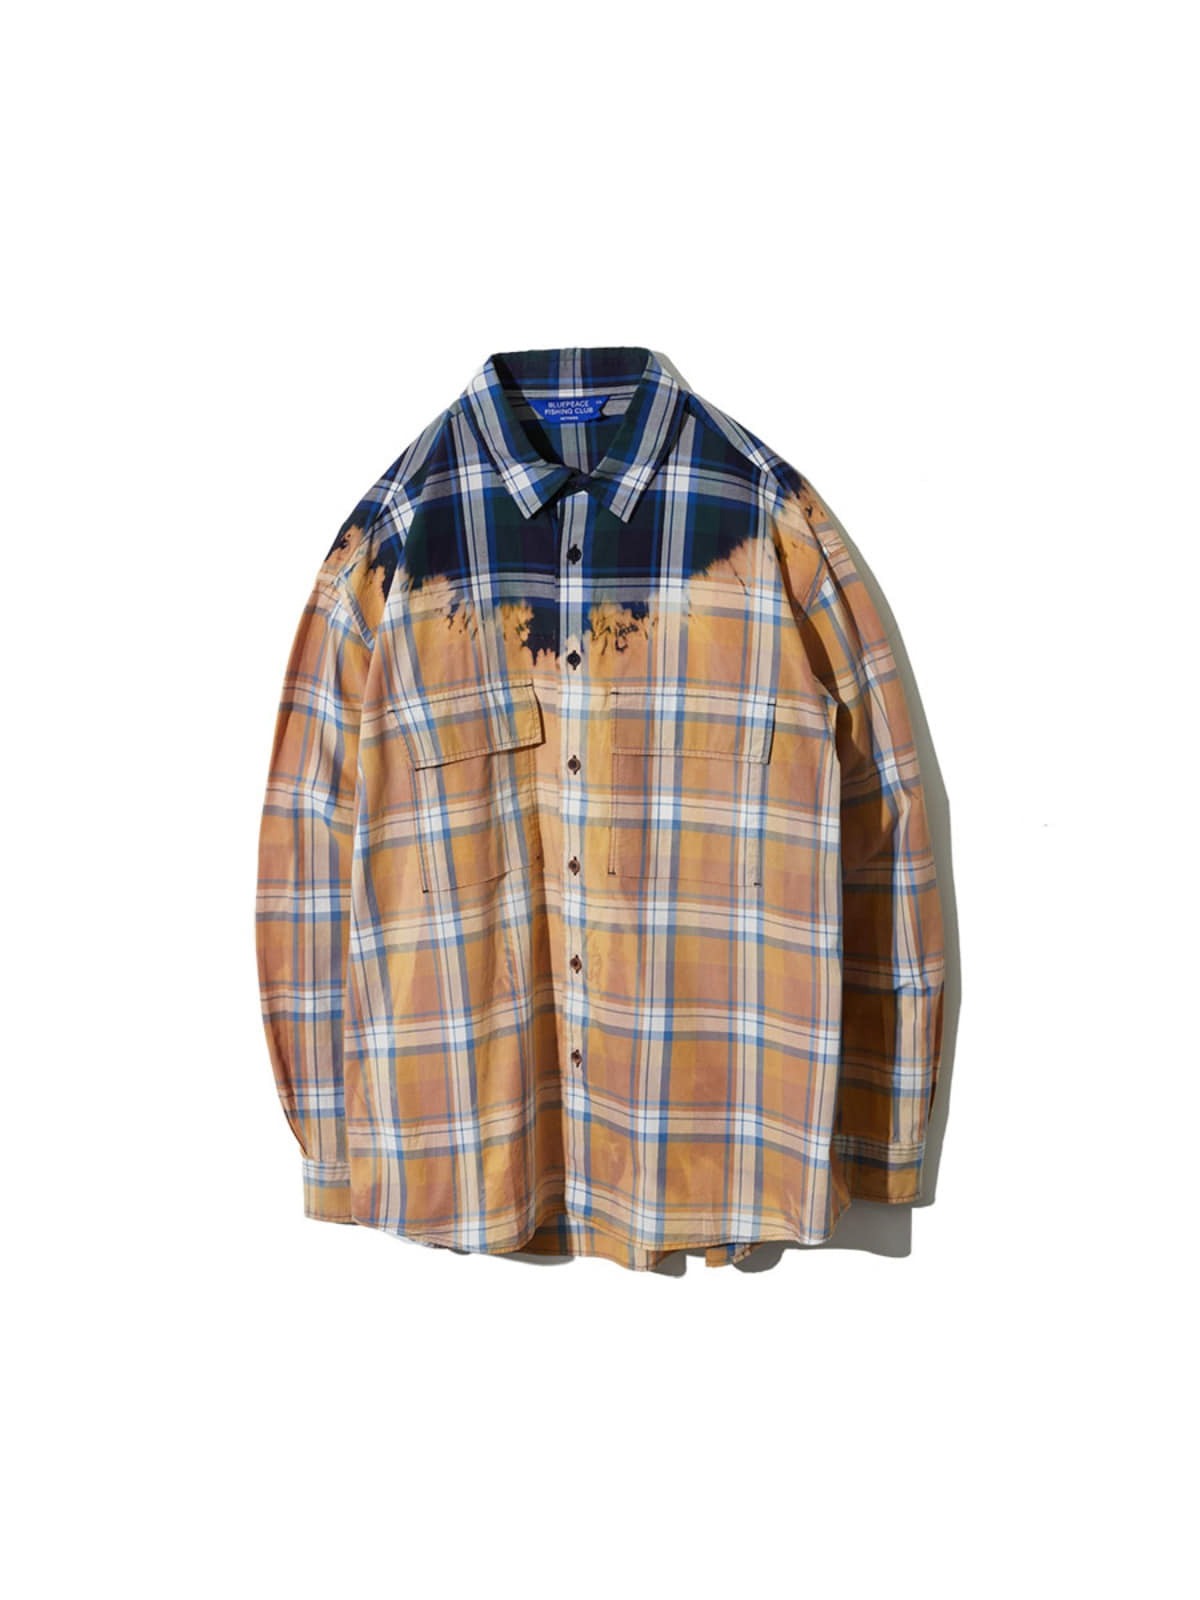 Half Dyed 222 2-Pocket Wide Shirt (Navy/Orange Check)